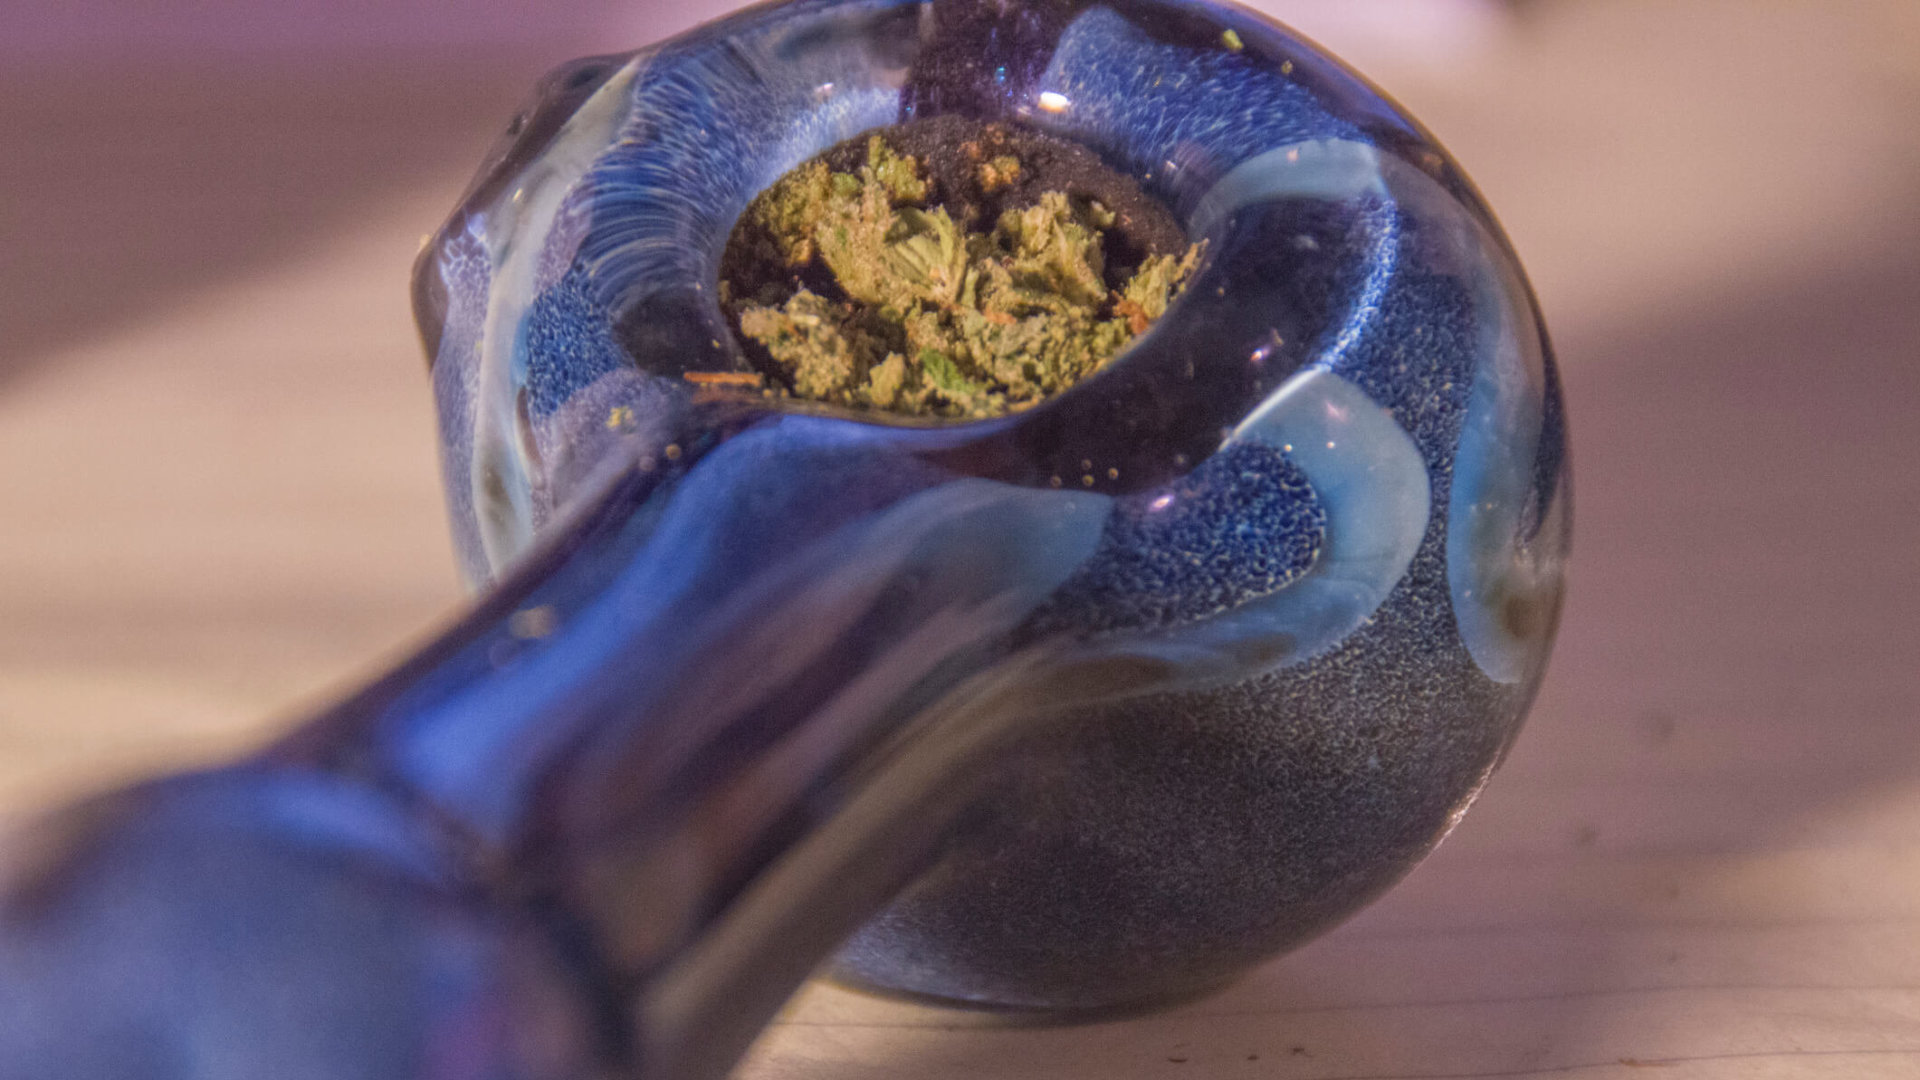 how to smoke marijuana from a glass pipe